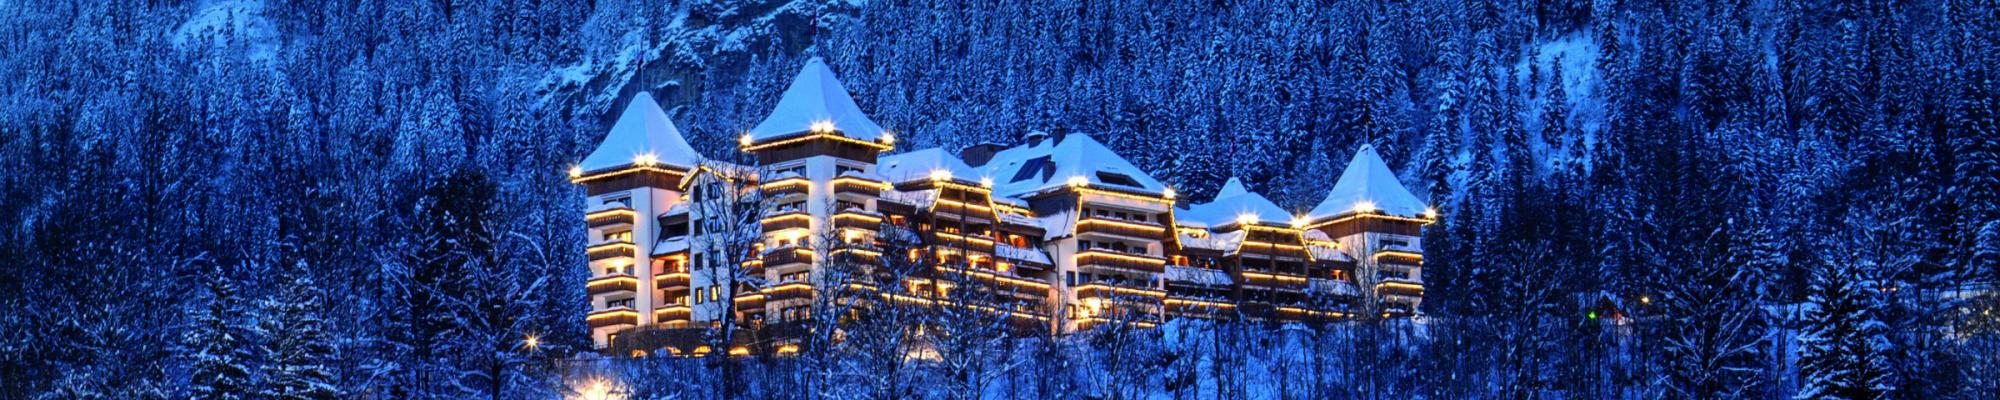 winter travel resort snow mountains alpina gstaad